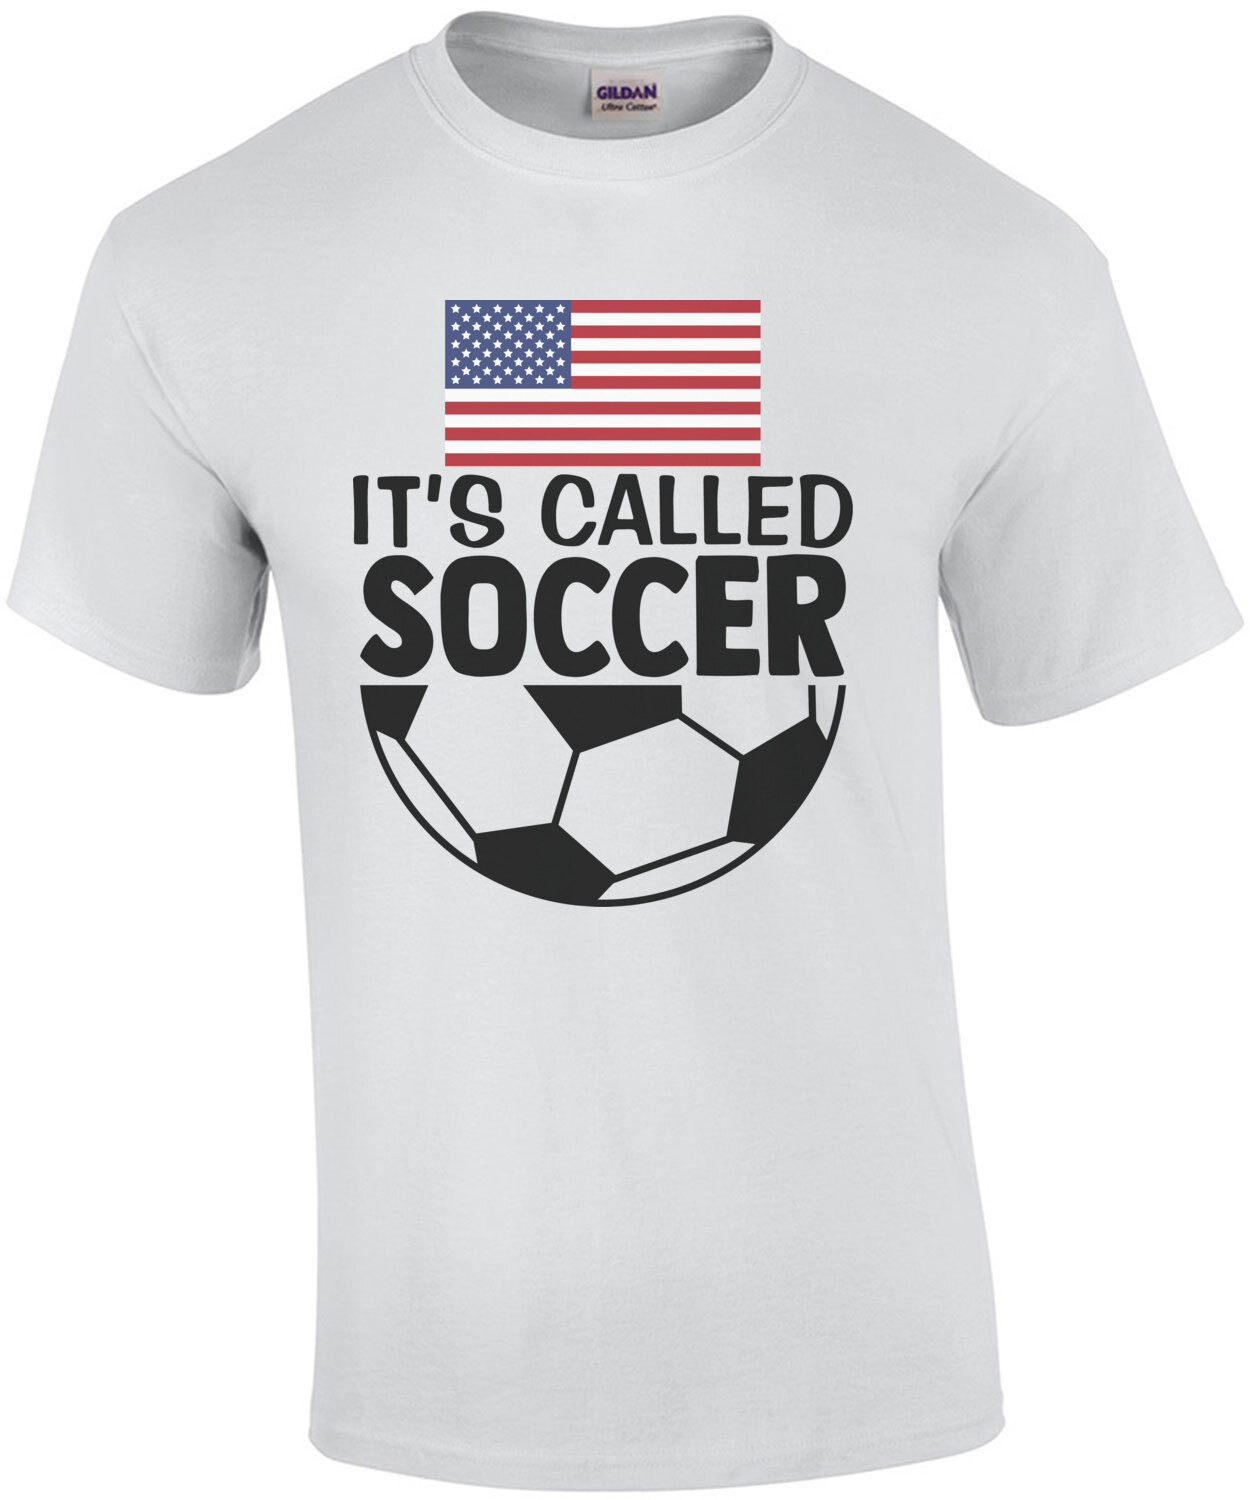 It's Called Soccer - USA Football Shirt